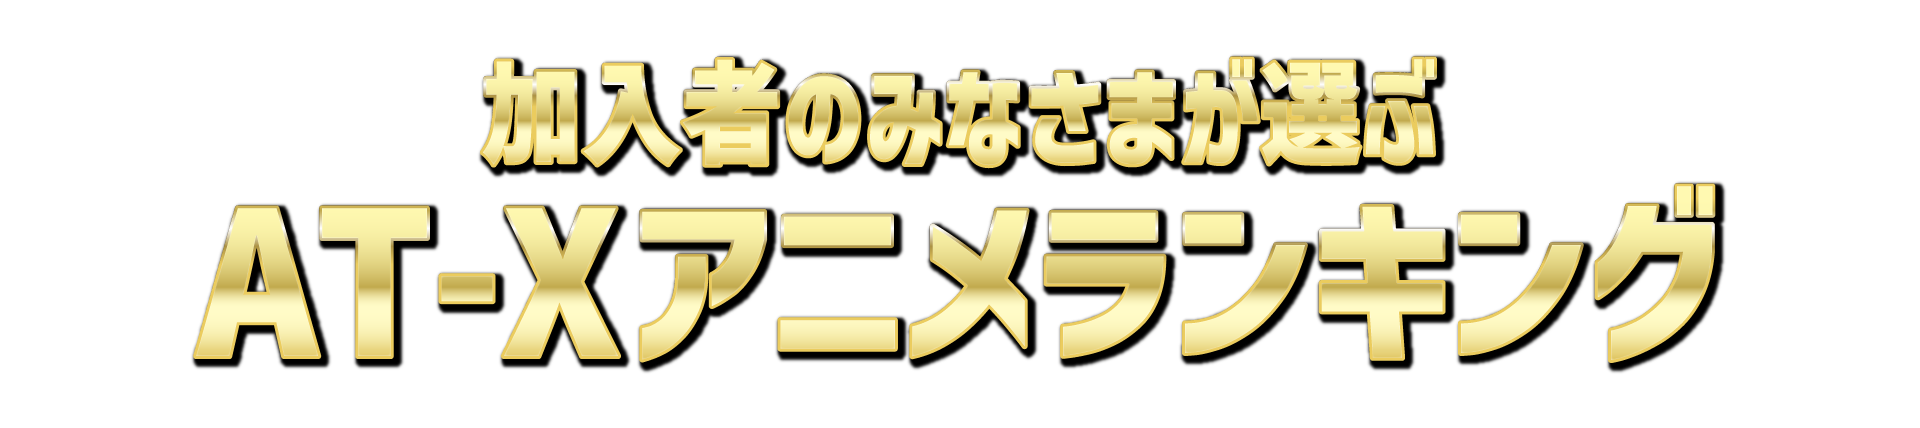 AT-Xアニメランキングロゴ